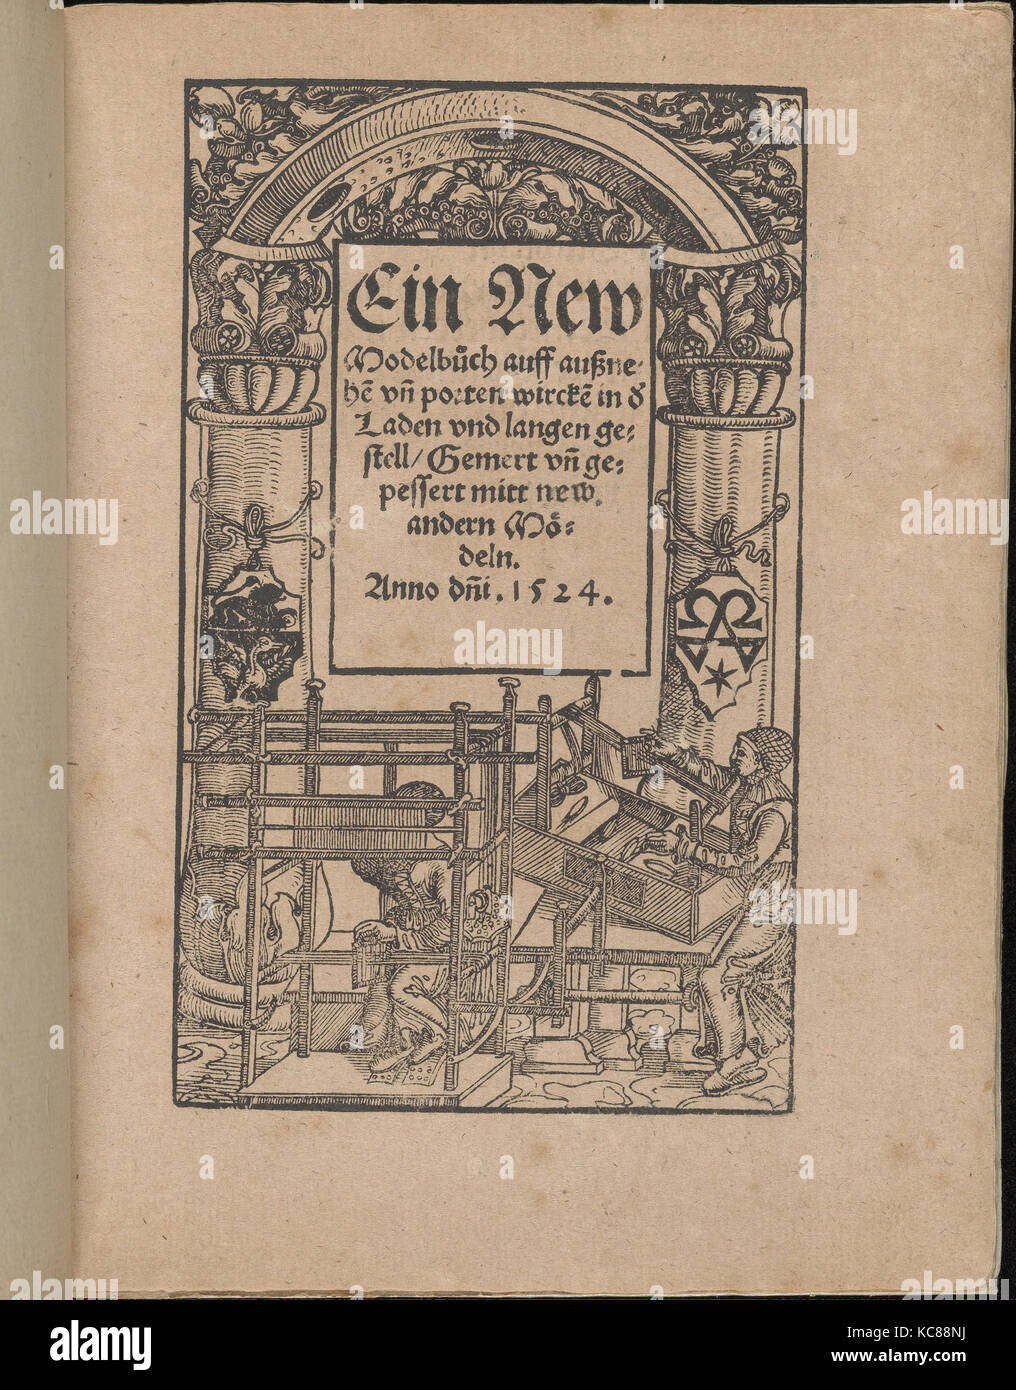 Ein new Modelbuch..., October 22, 1524, Woodcut, 7 5/16 x 5 3/8 in. (18.5 x 13.6 cm), Published by Johann Schӧnsperger Stock Photo